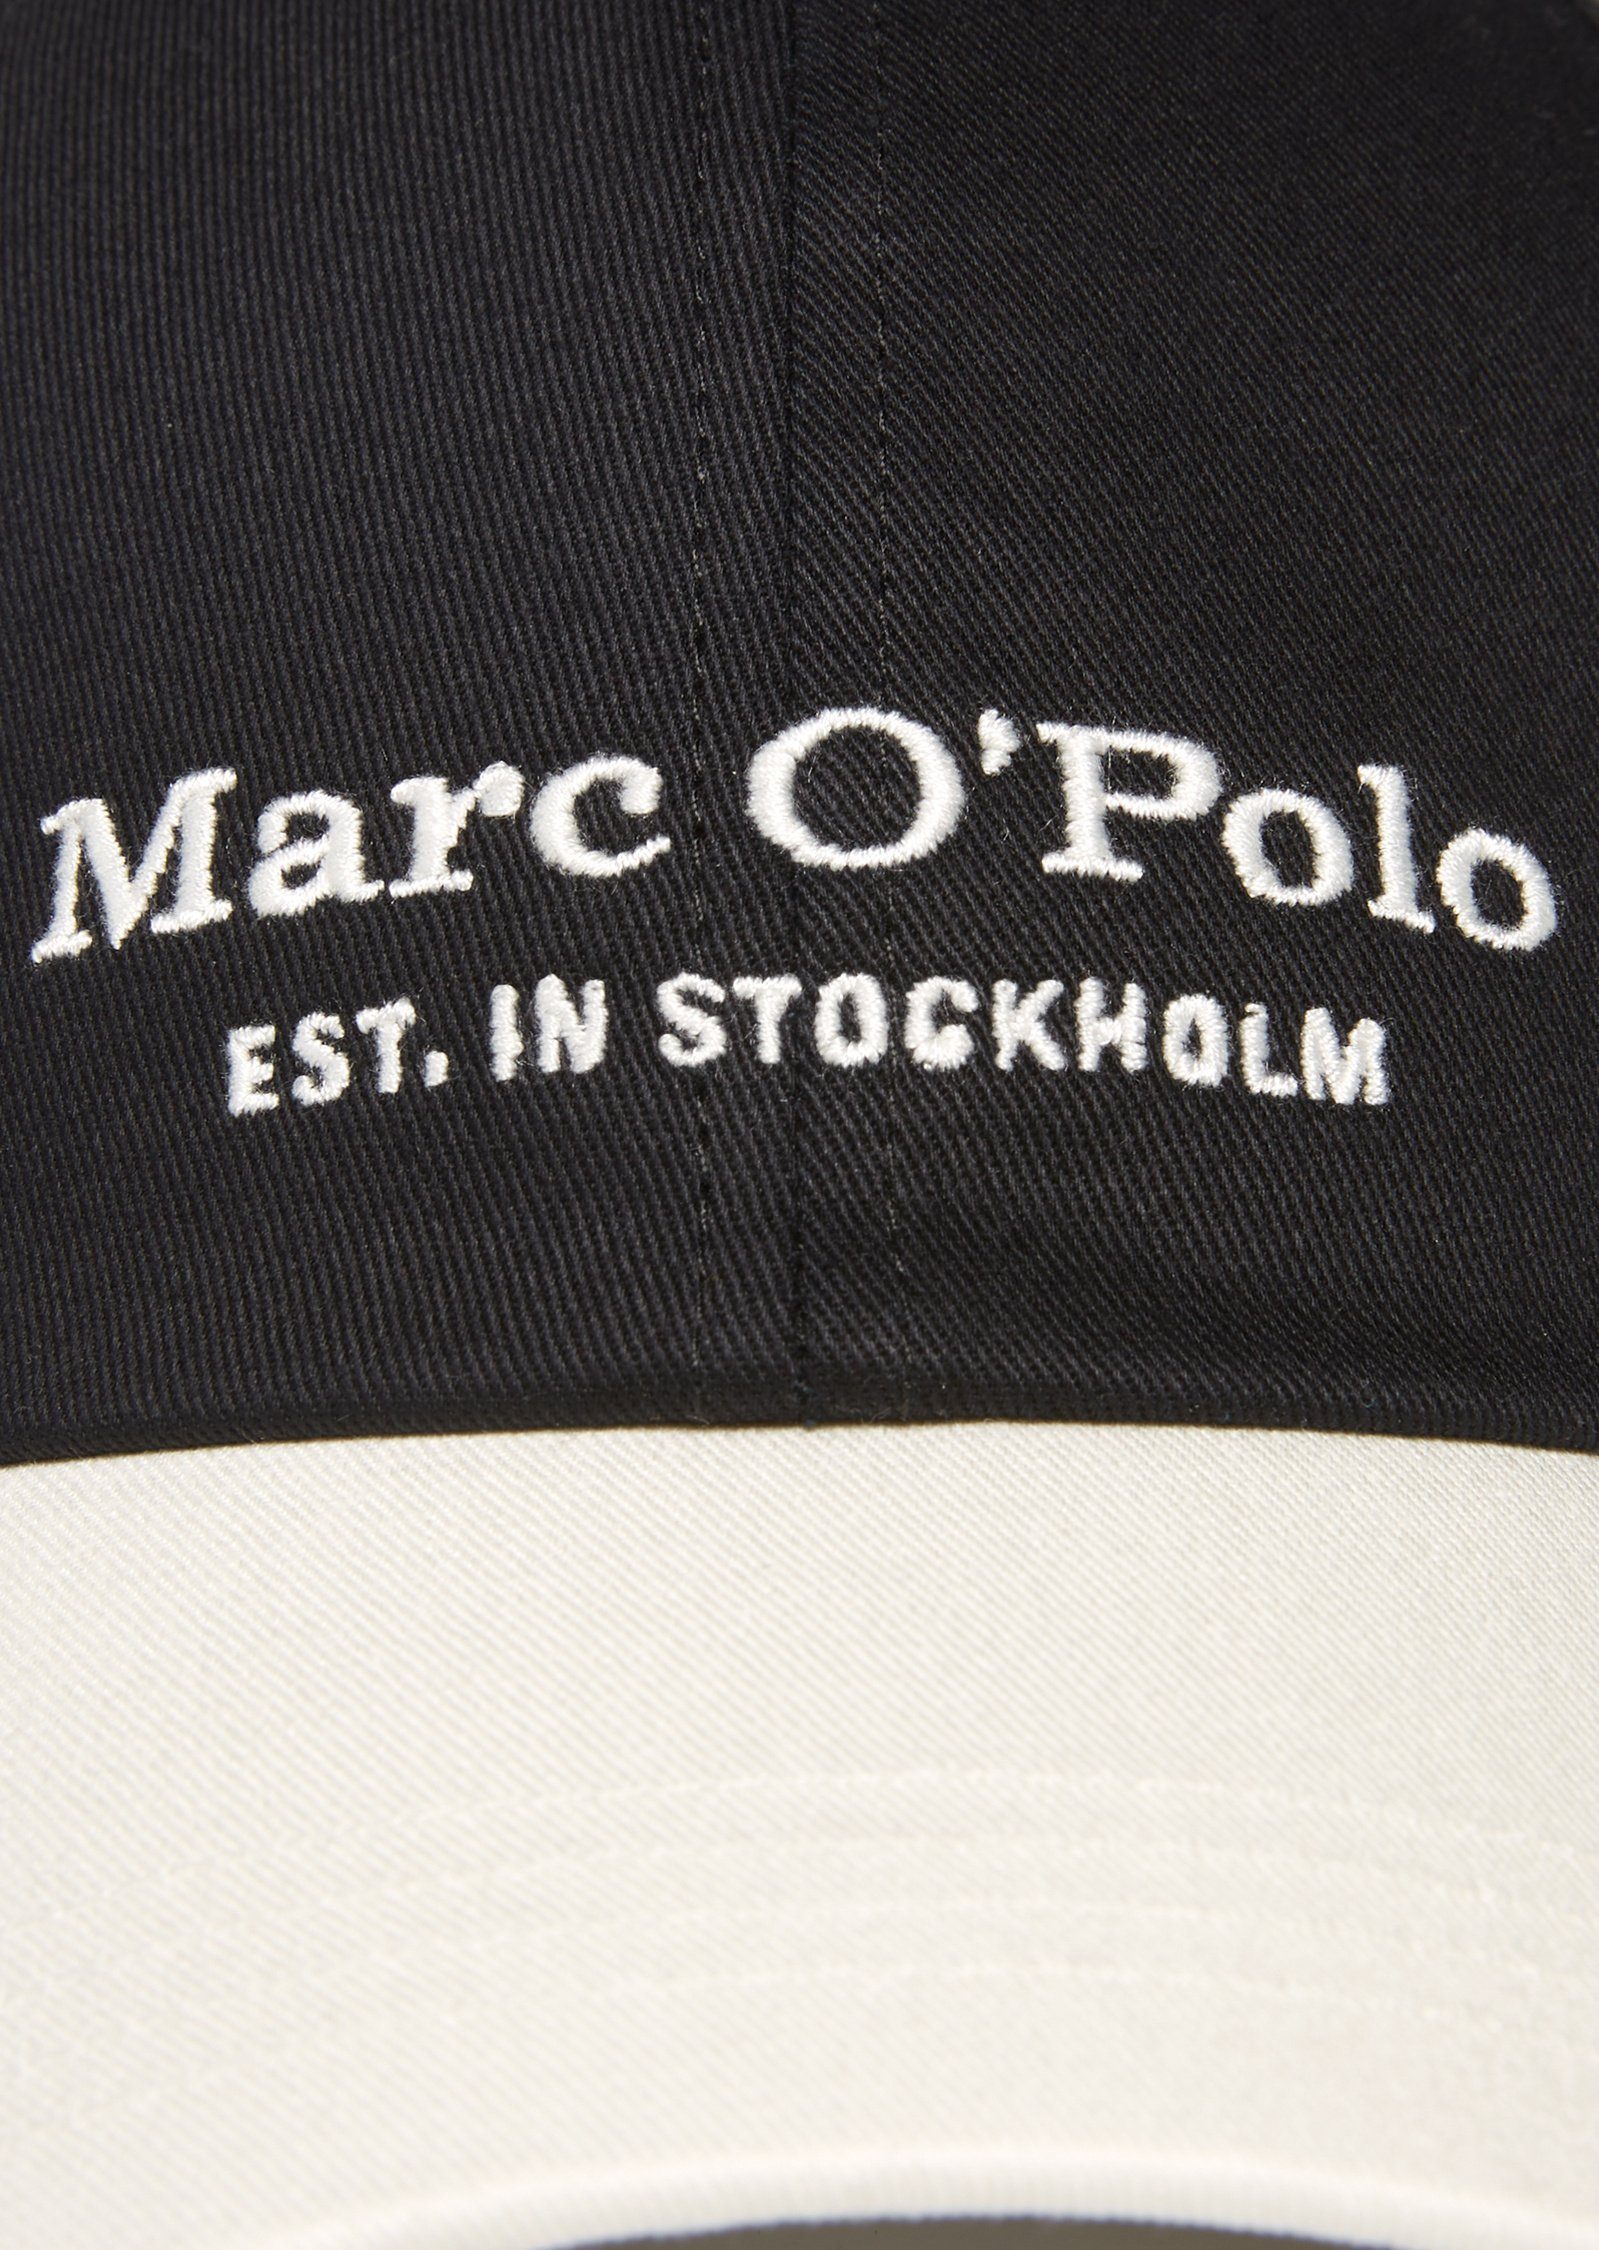 Marc aus Organic Cap schwarz reinem Baseball Cotton O'Polo